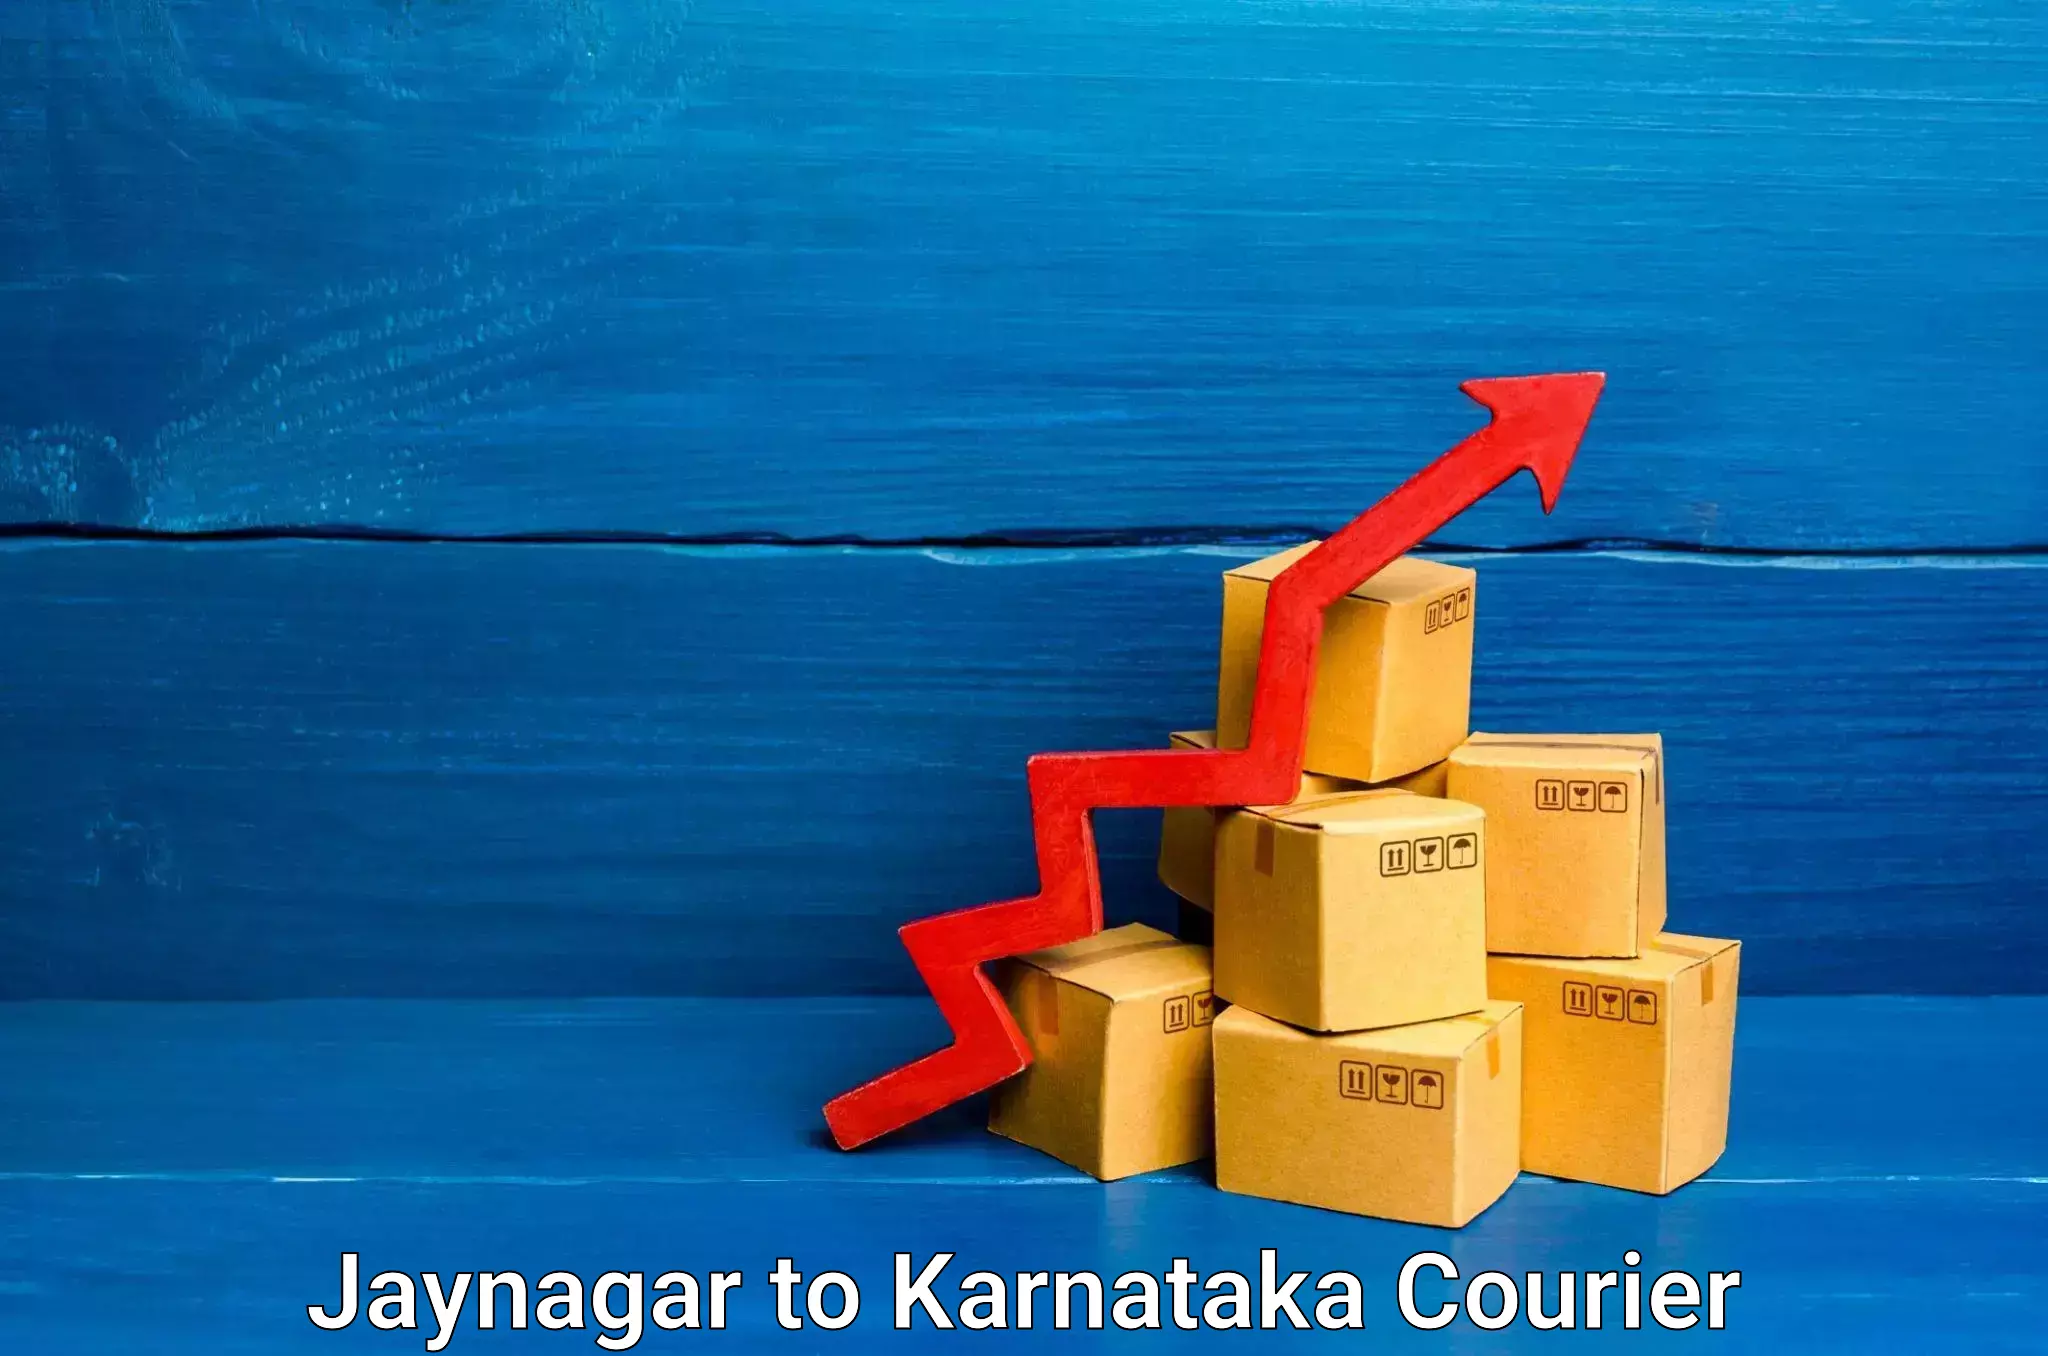 Professional moving company Jaynagar to Karnataka